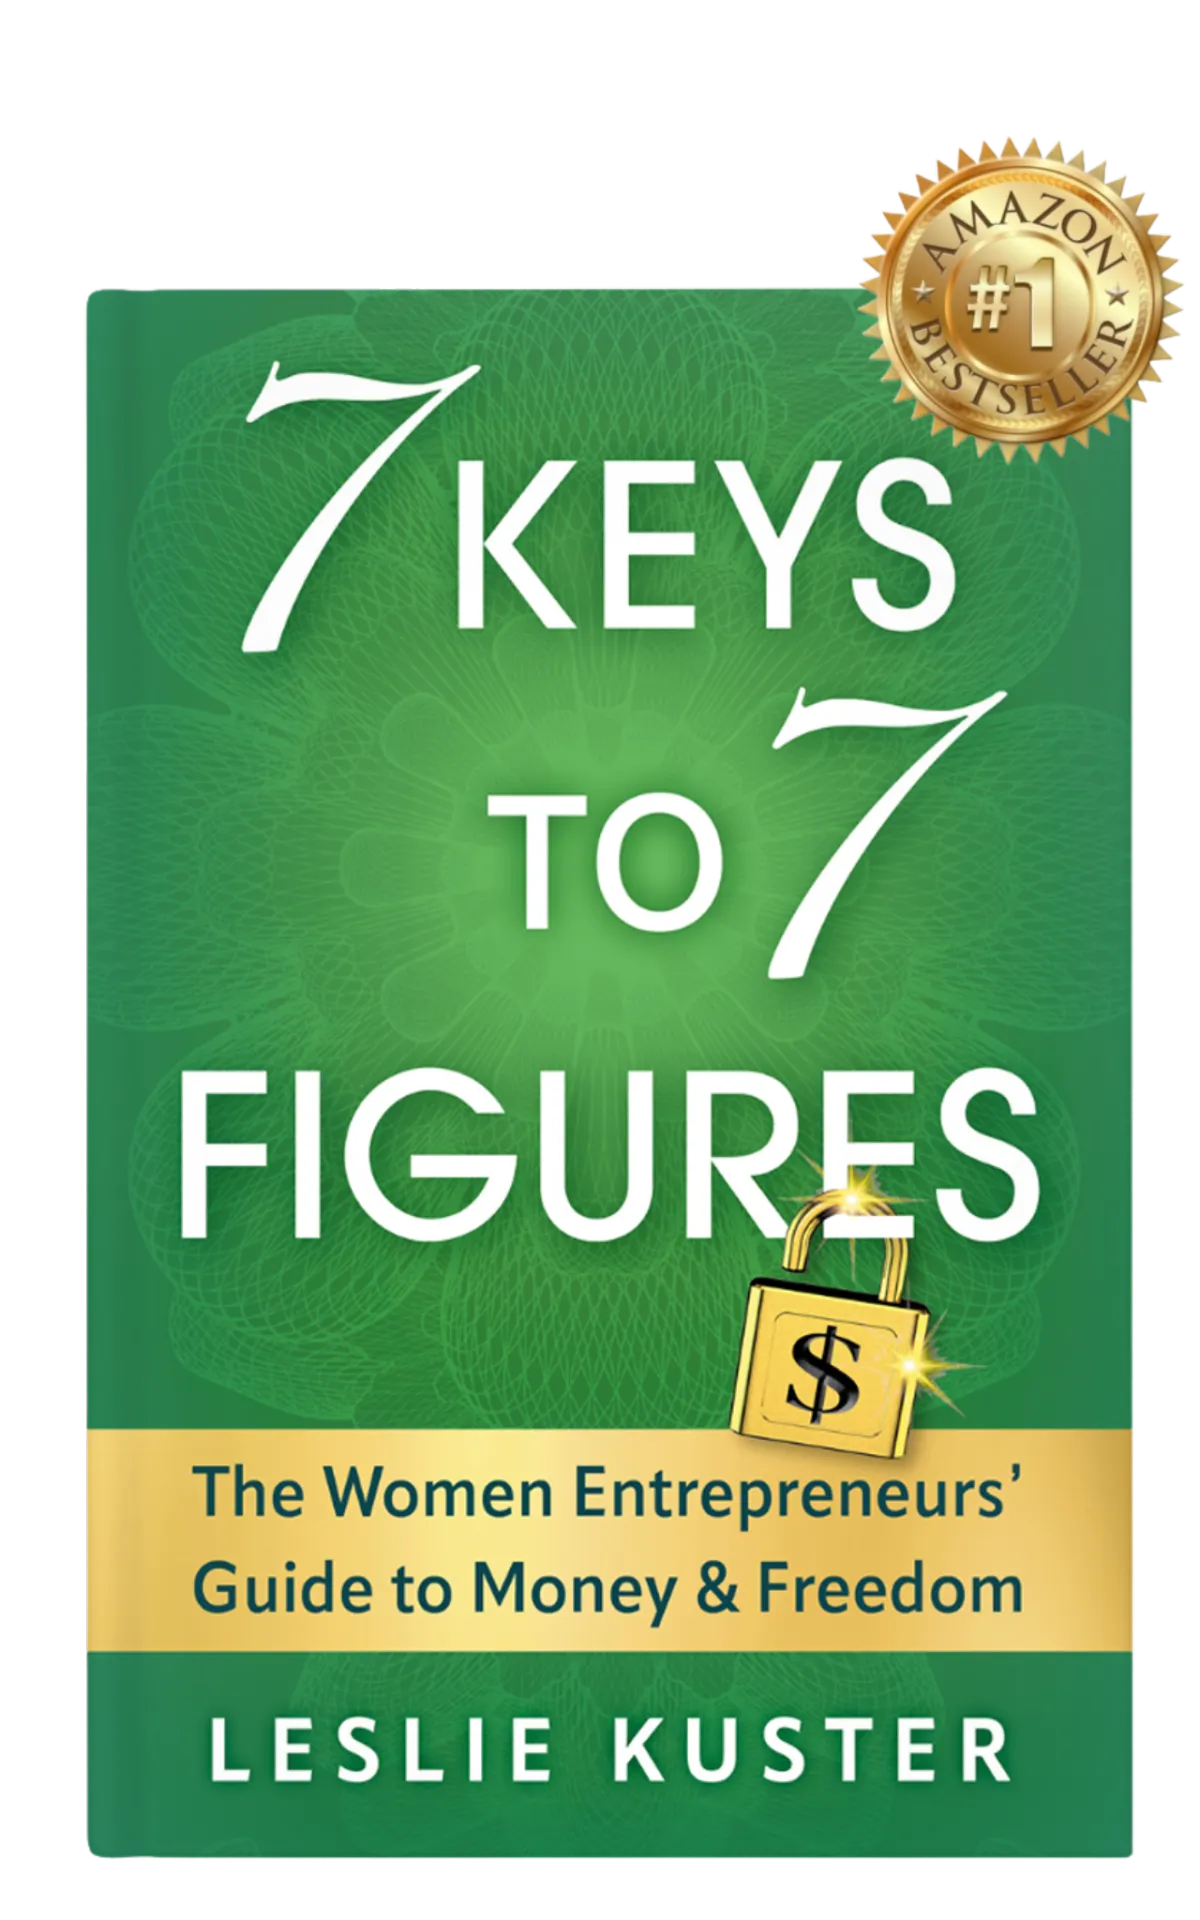 7 Keys To 7 Figures